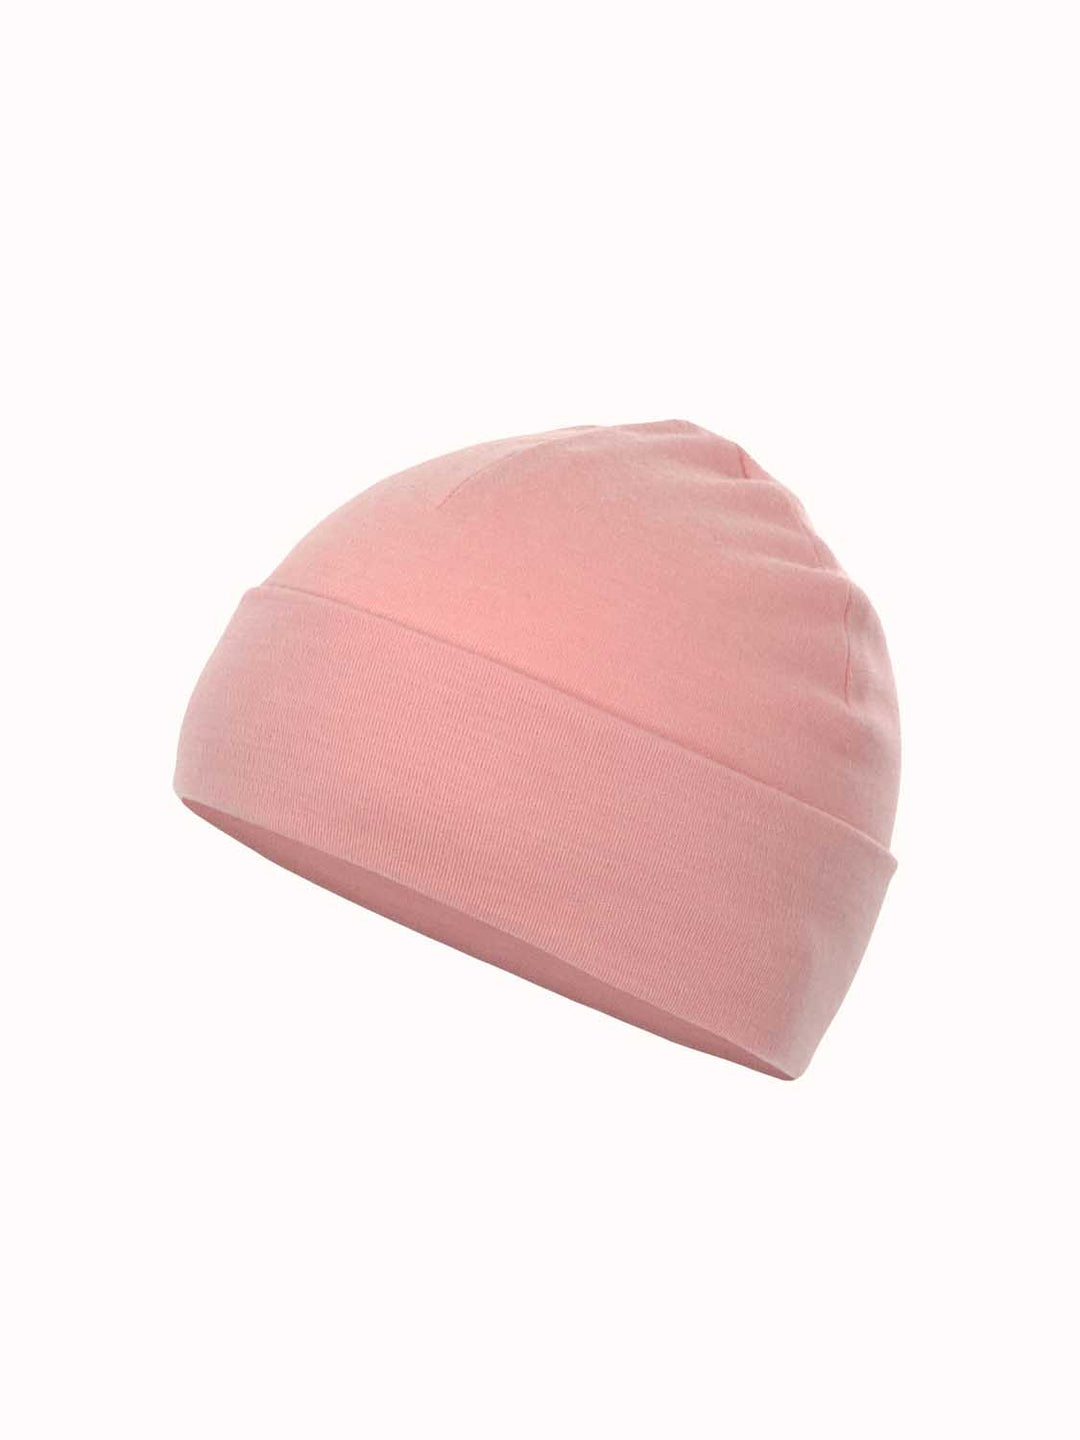 Merino beanie hat pink #colour_vintage-rose